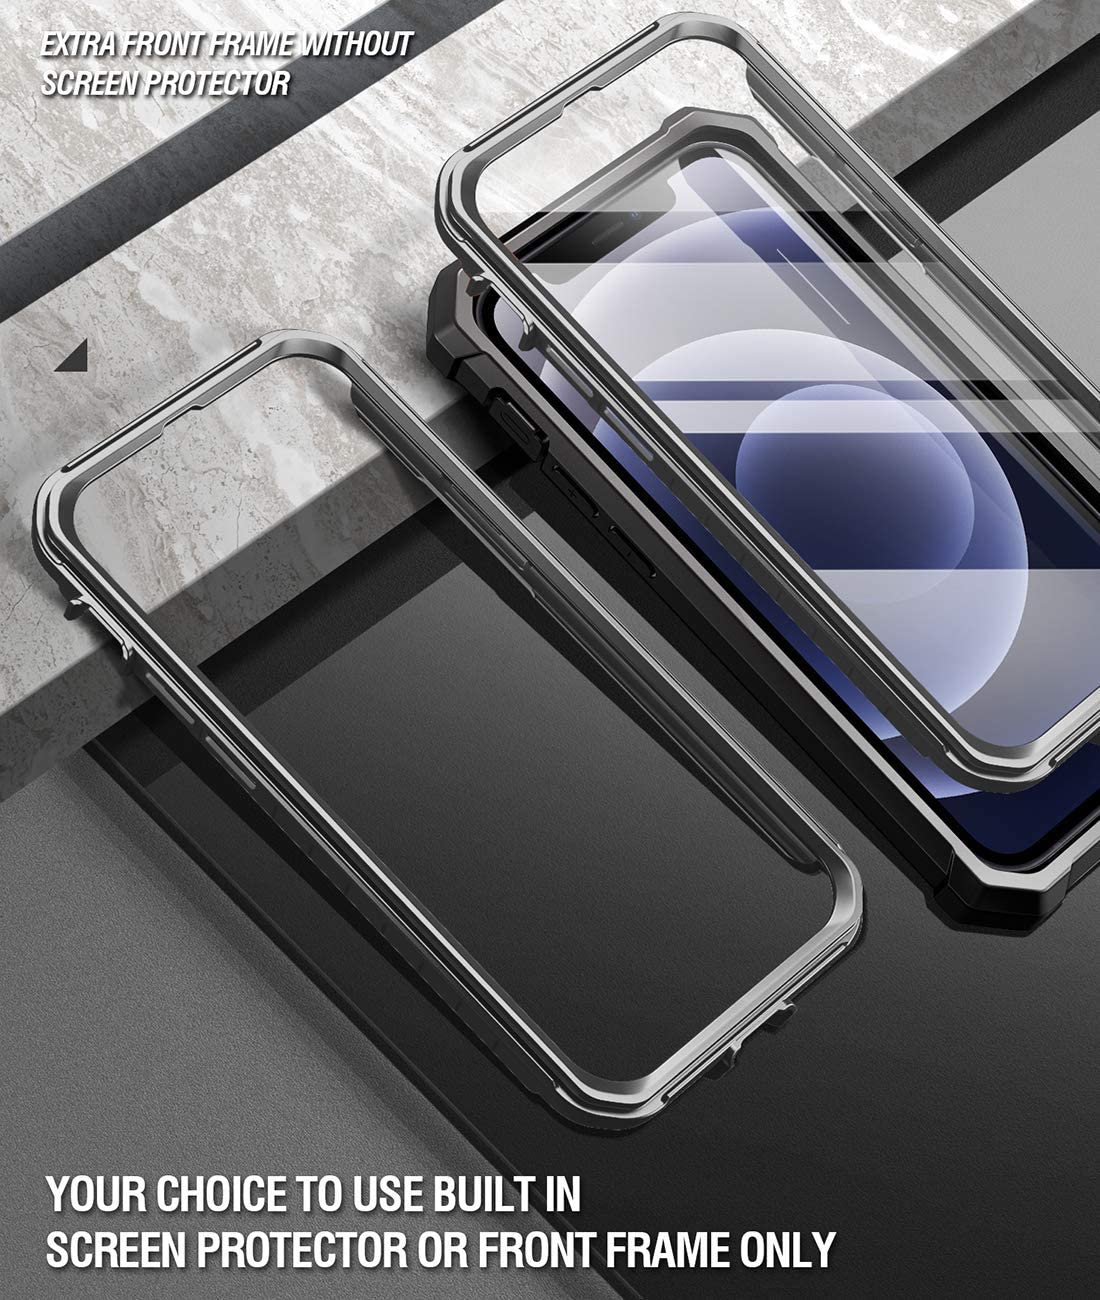 Apple iPhone 12 Mini Case